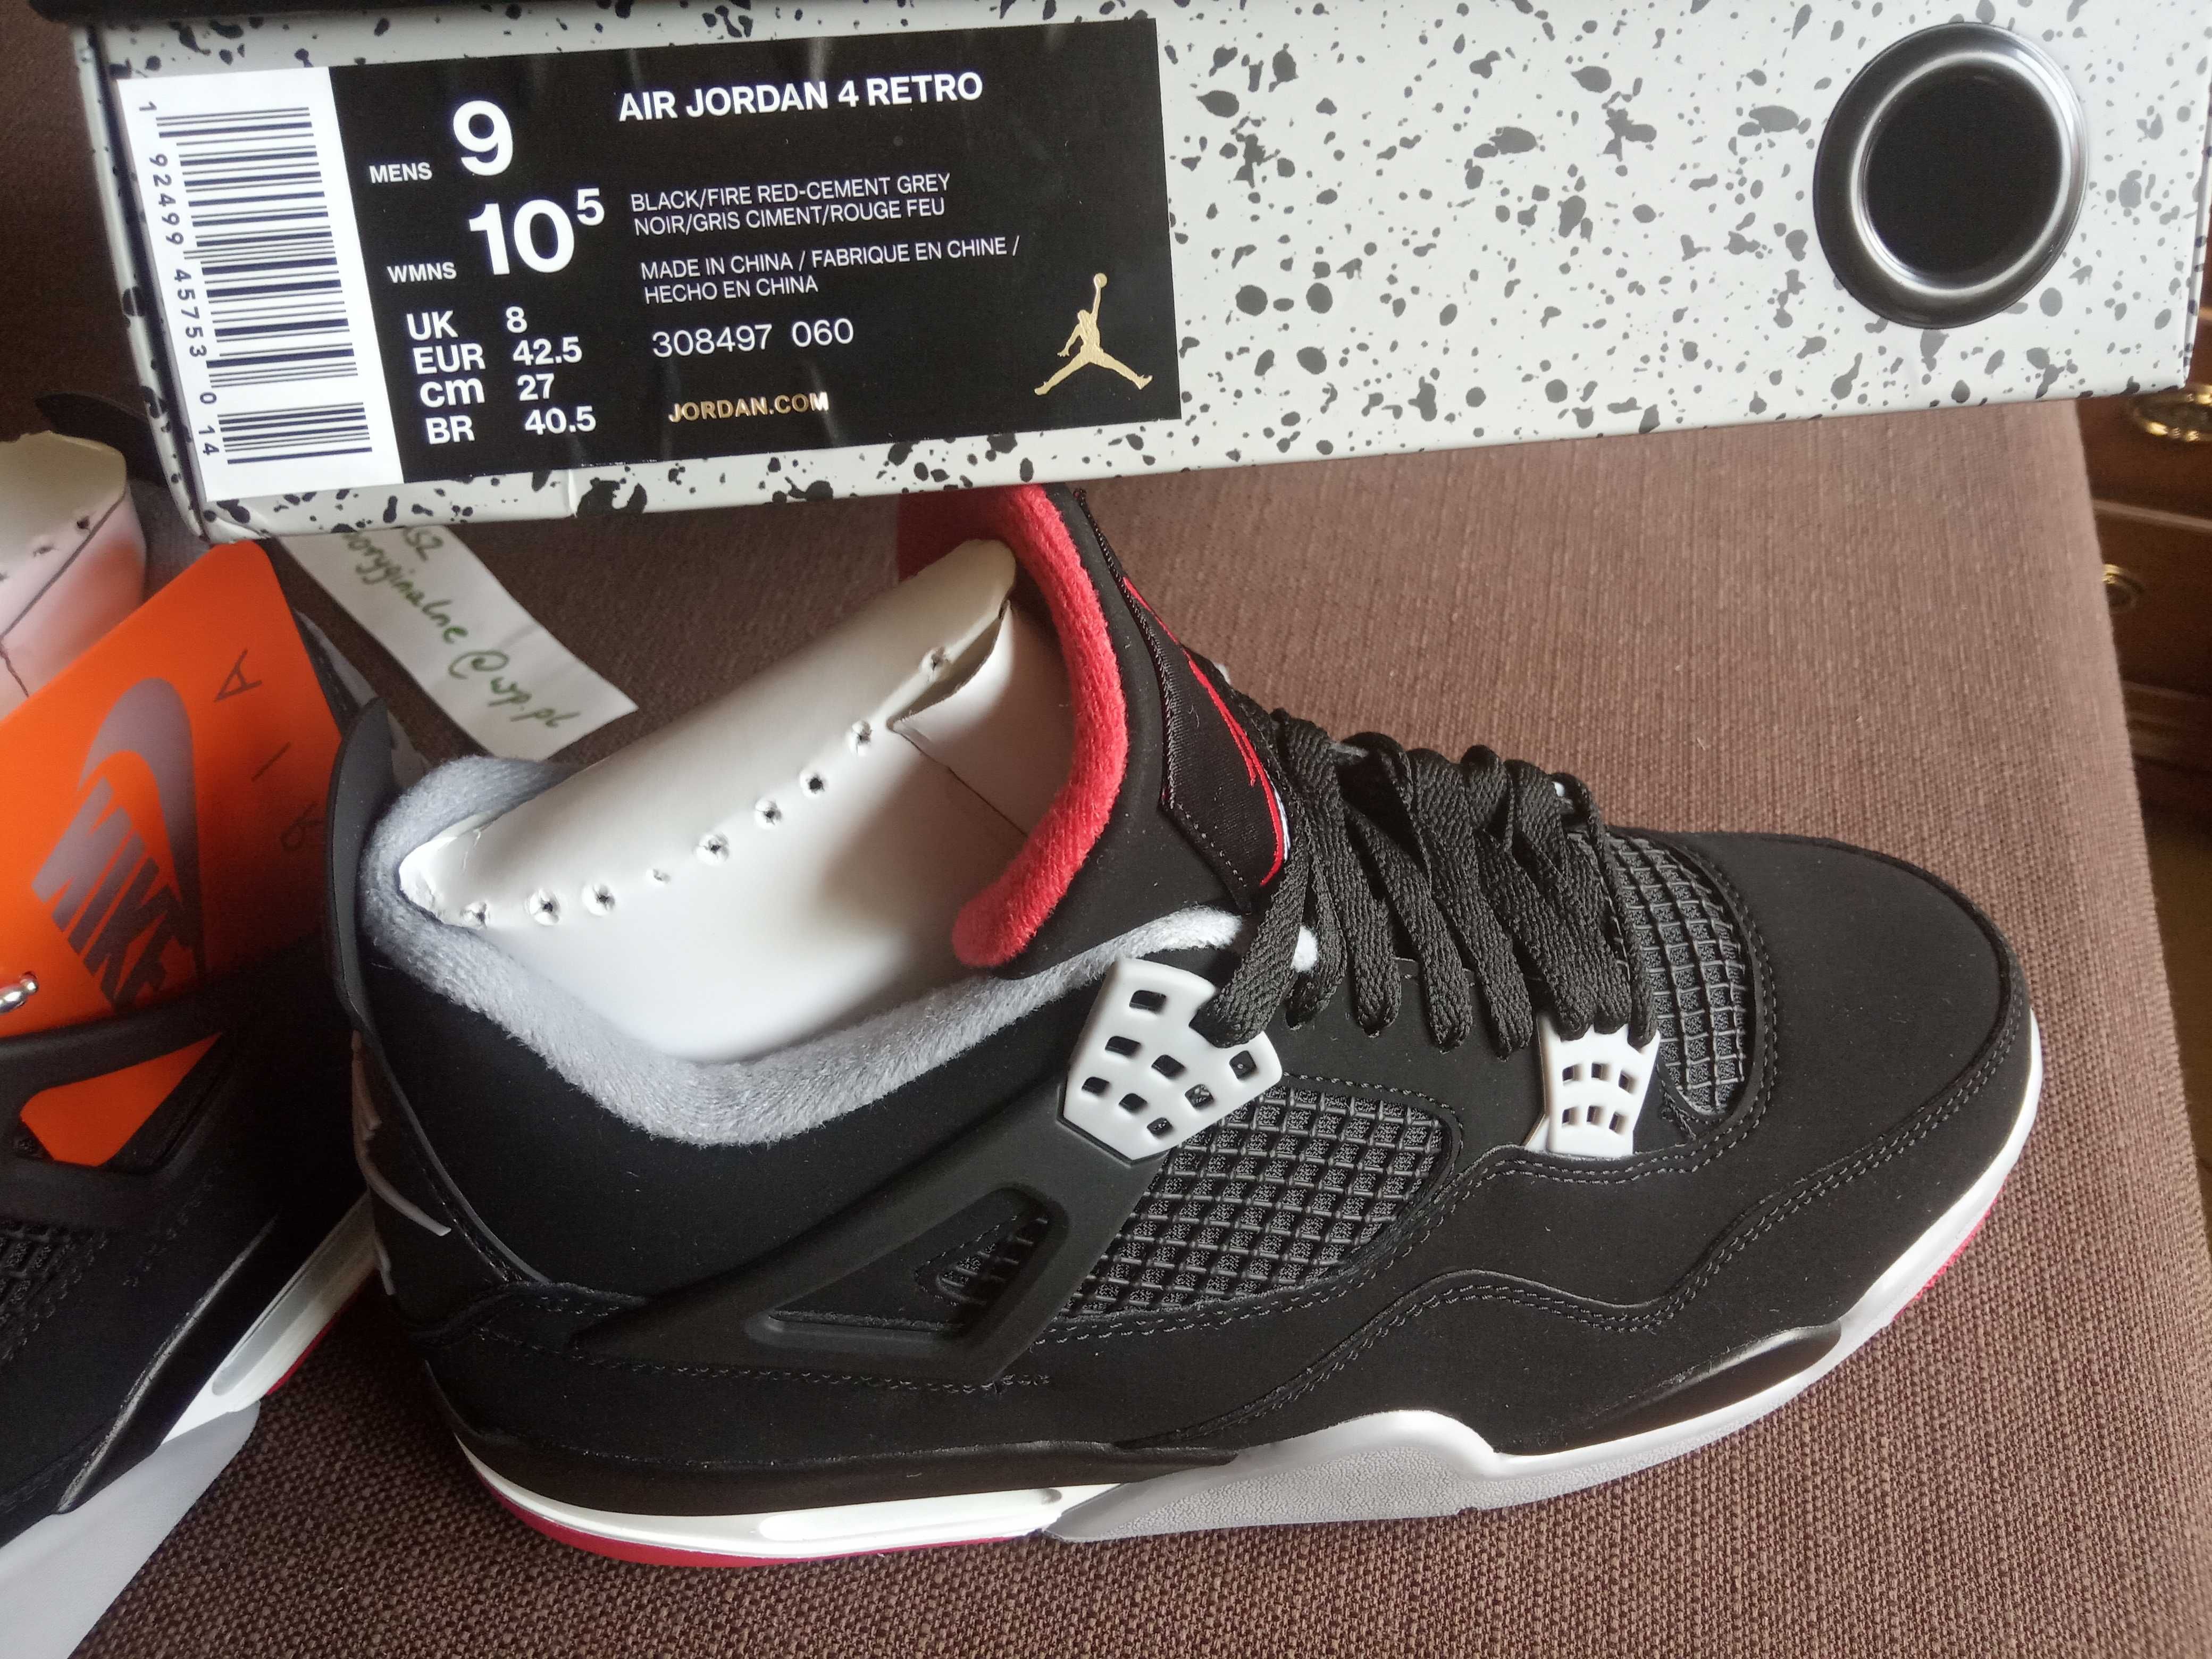 (r. 42,5- us 9) Nike Jordan 4 Retro Bred (2019) kod 308497,-060